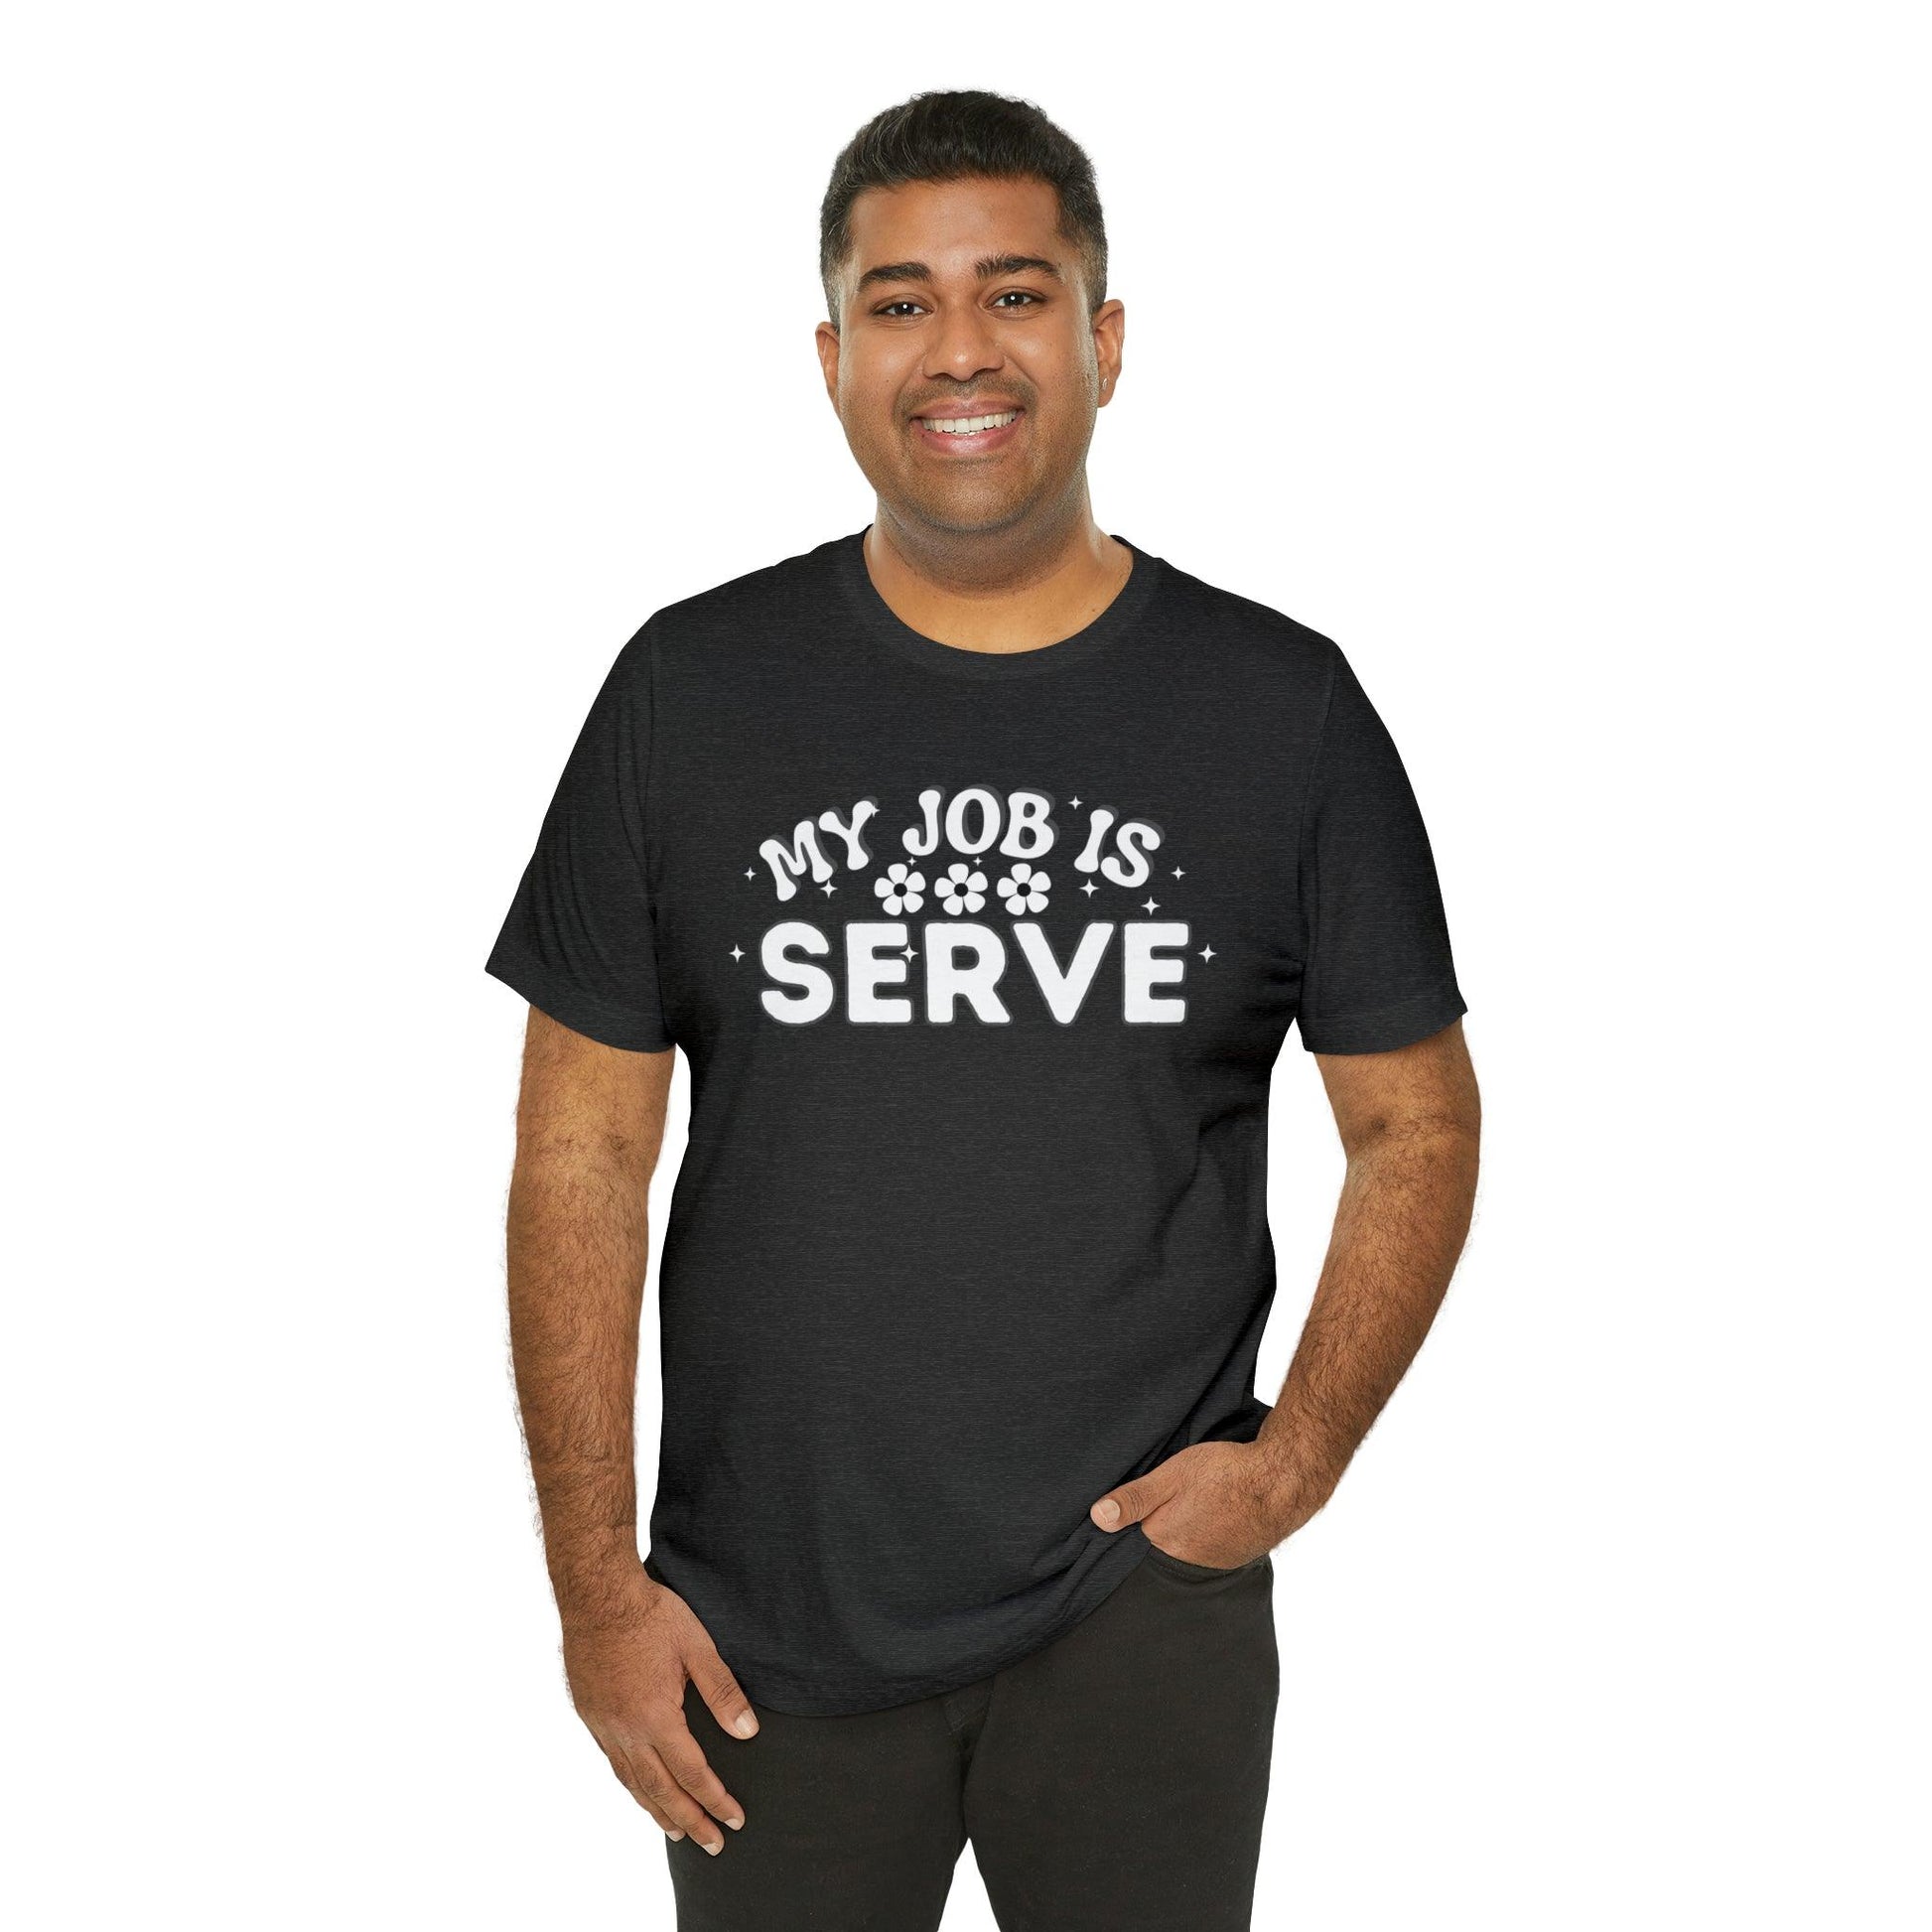 My Job is Serve Shirt Military Shirt Customer Service Shirt Waiter/Waitress Public Servant, Hotel Concierge, Caterer, Flight Attendant, Bartender Barista - Giftsmojo